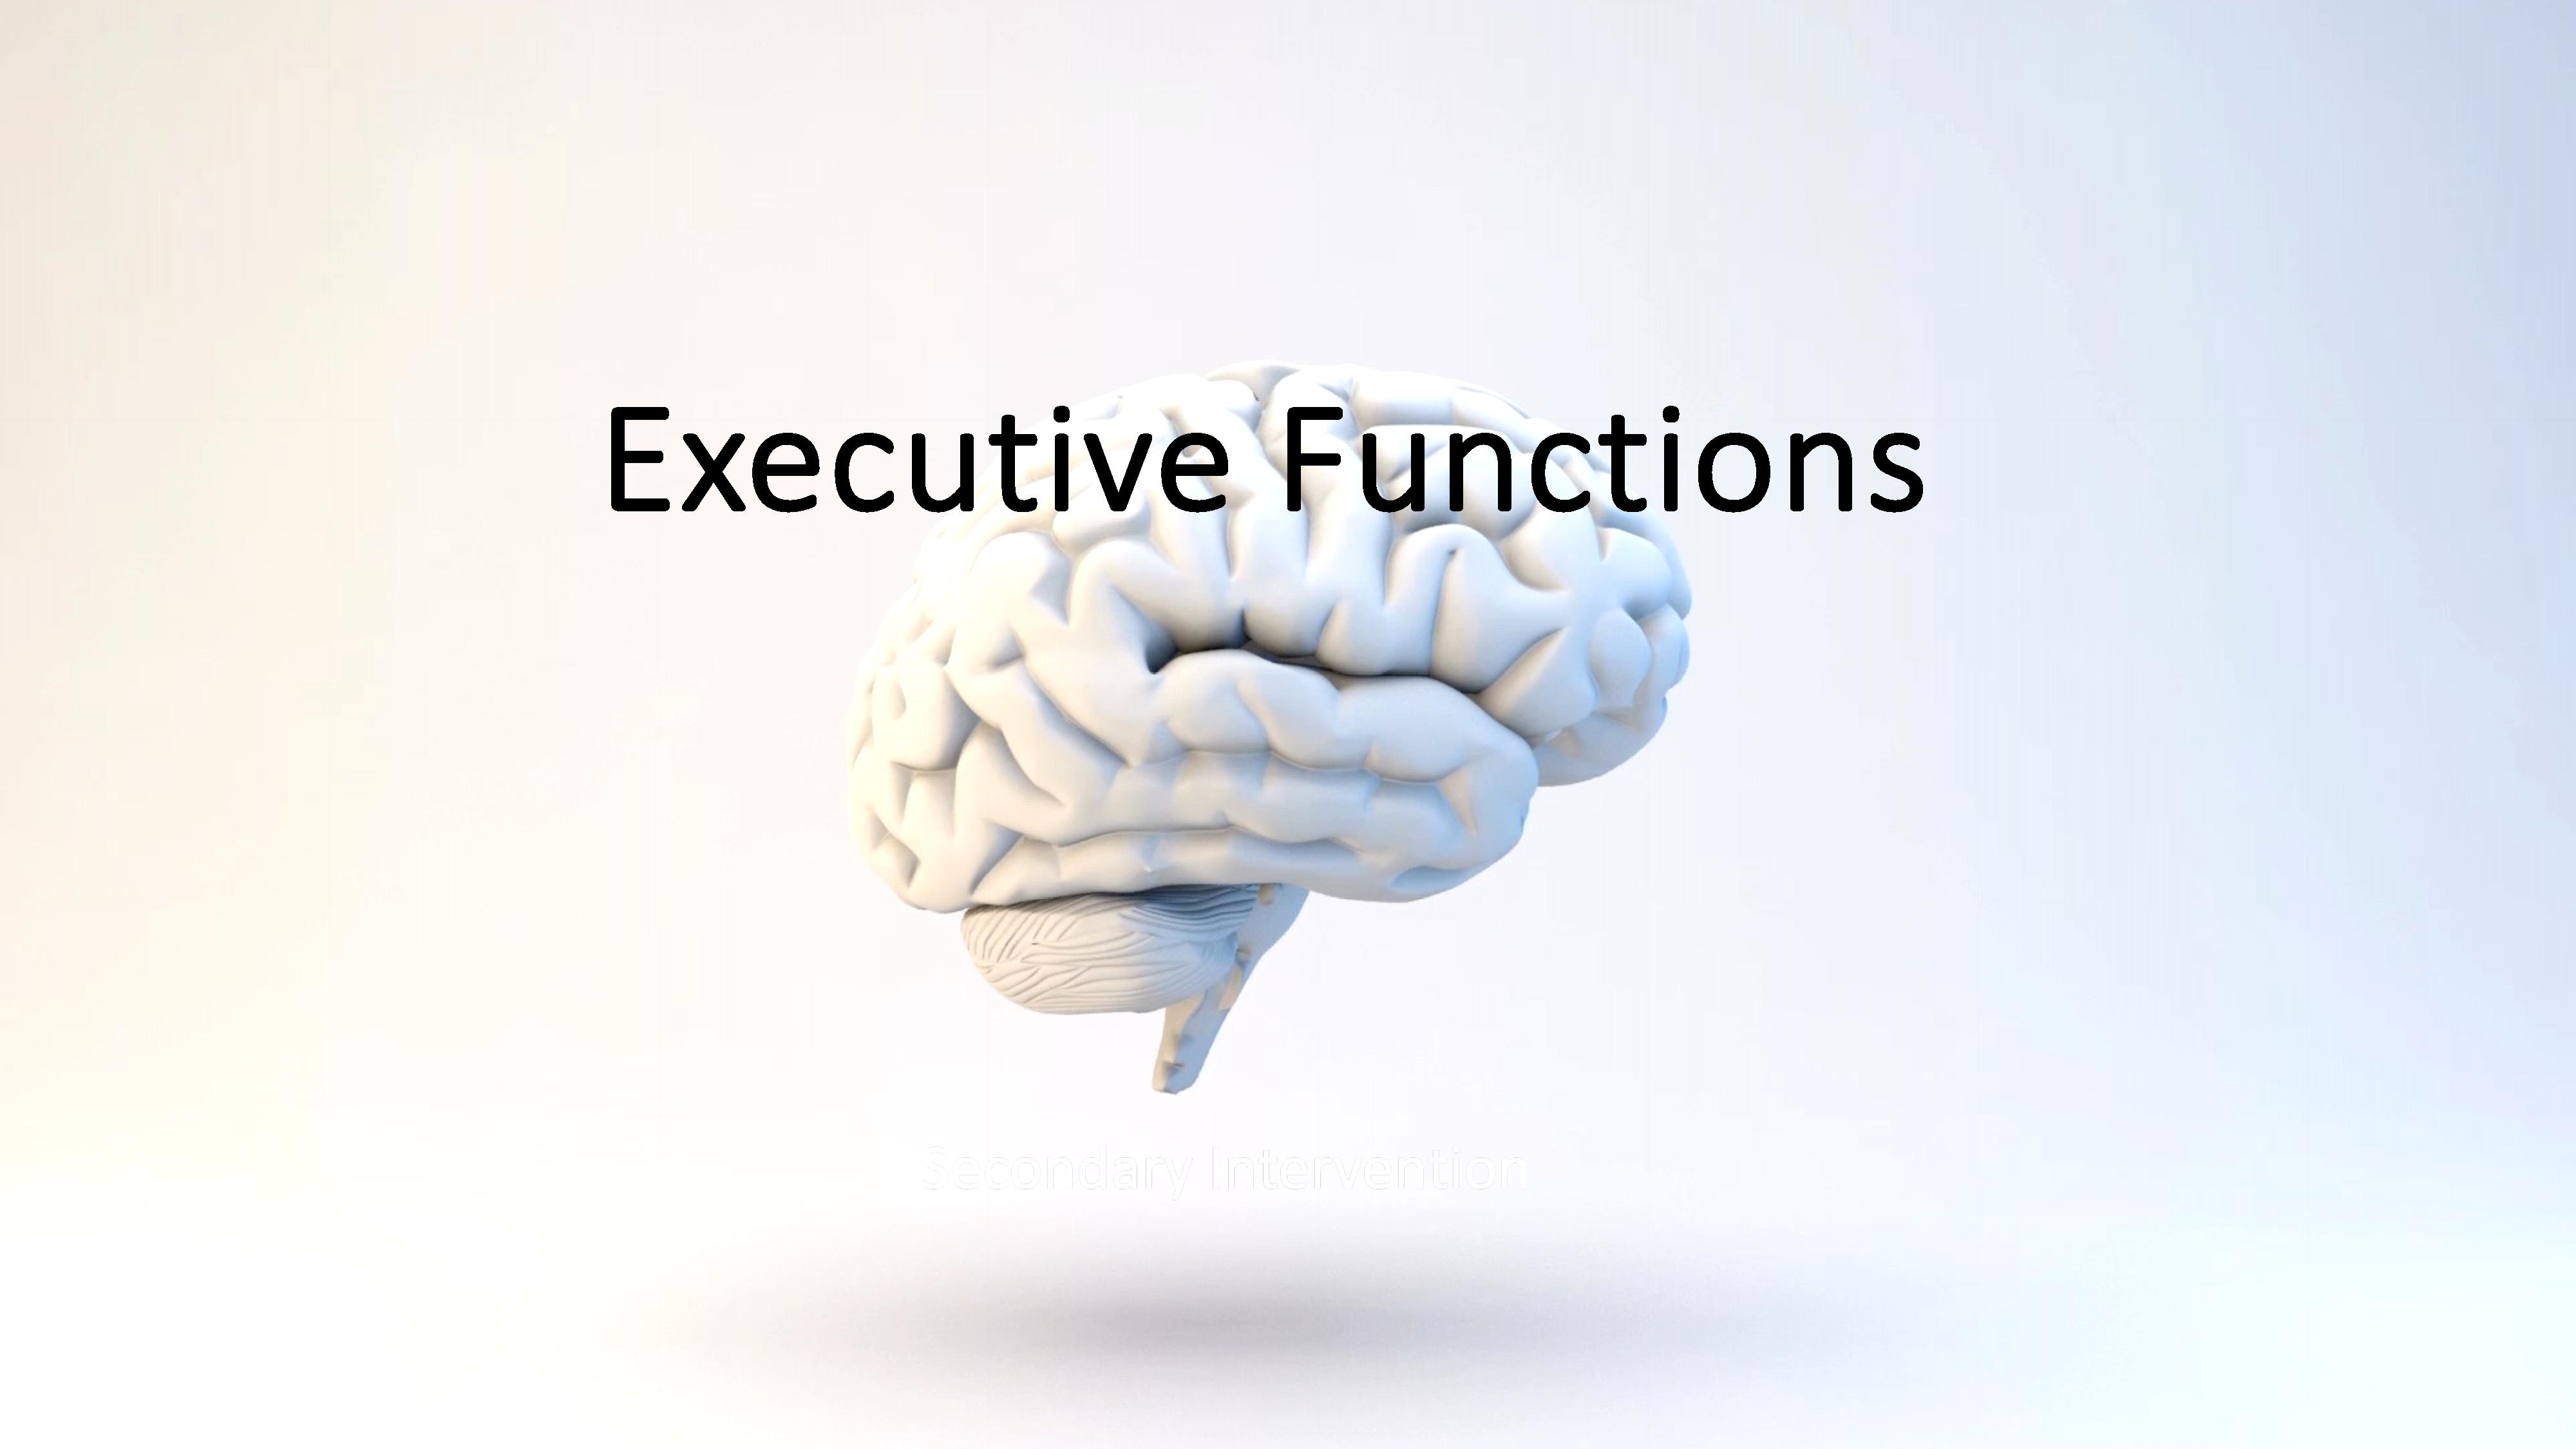 Executive Functioning Presentation Image - linked to https://5il.co/26fzj